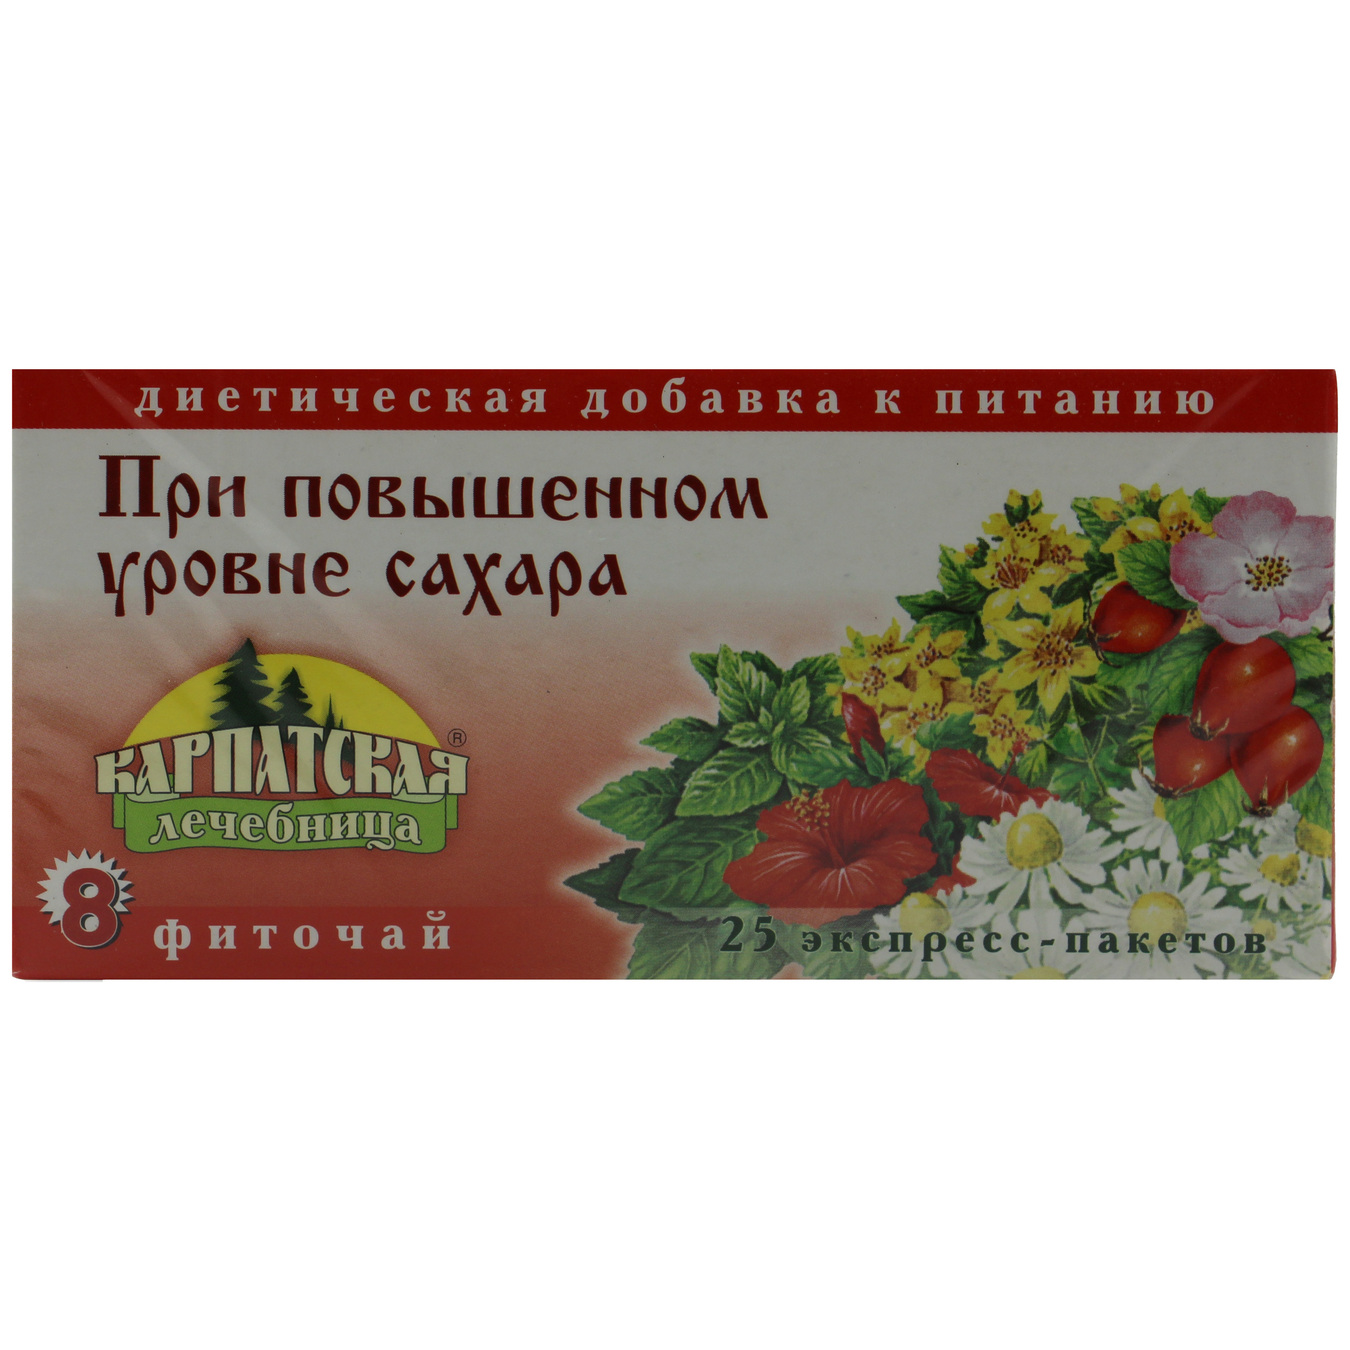 Herbal tea Karpatskaya Lechebnitsa 8 for blood sugar normalization berries and herbs 25pcsx0,8g teabags